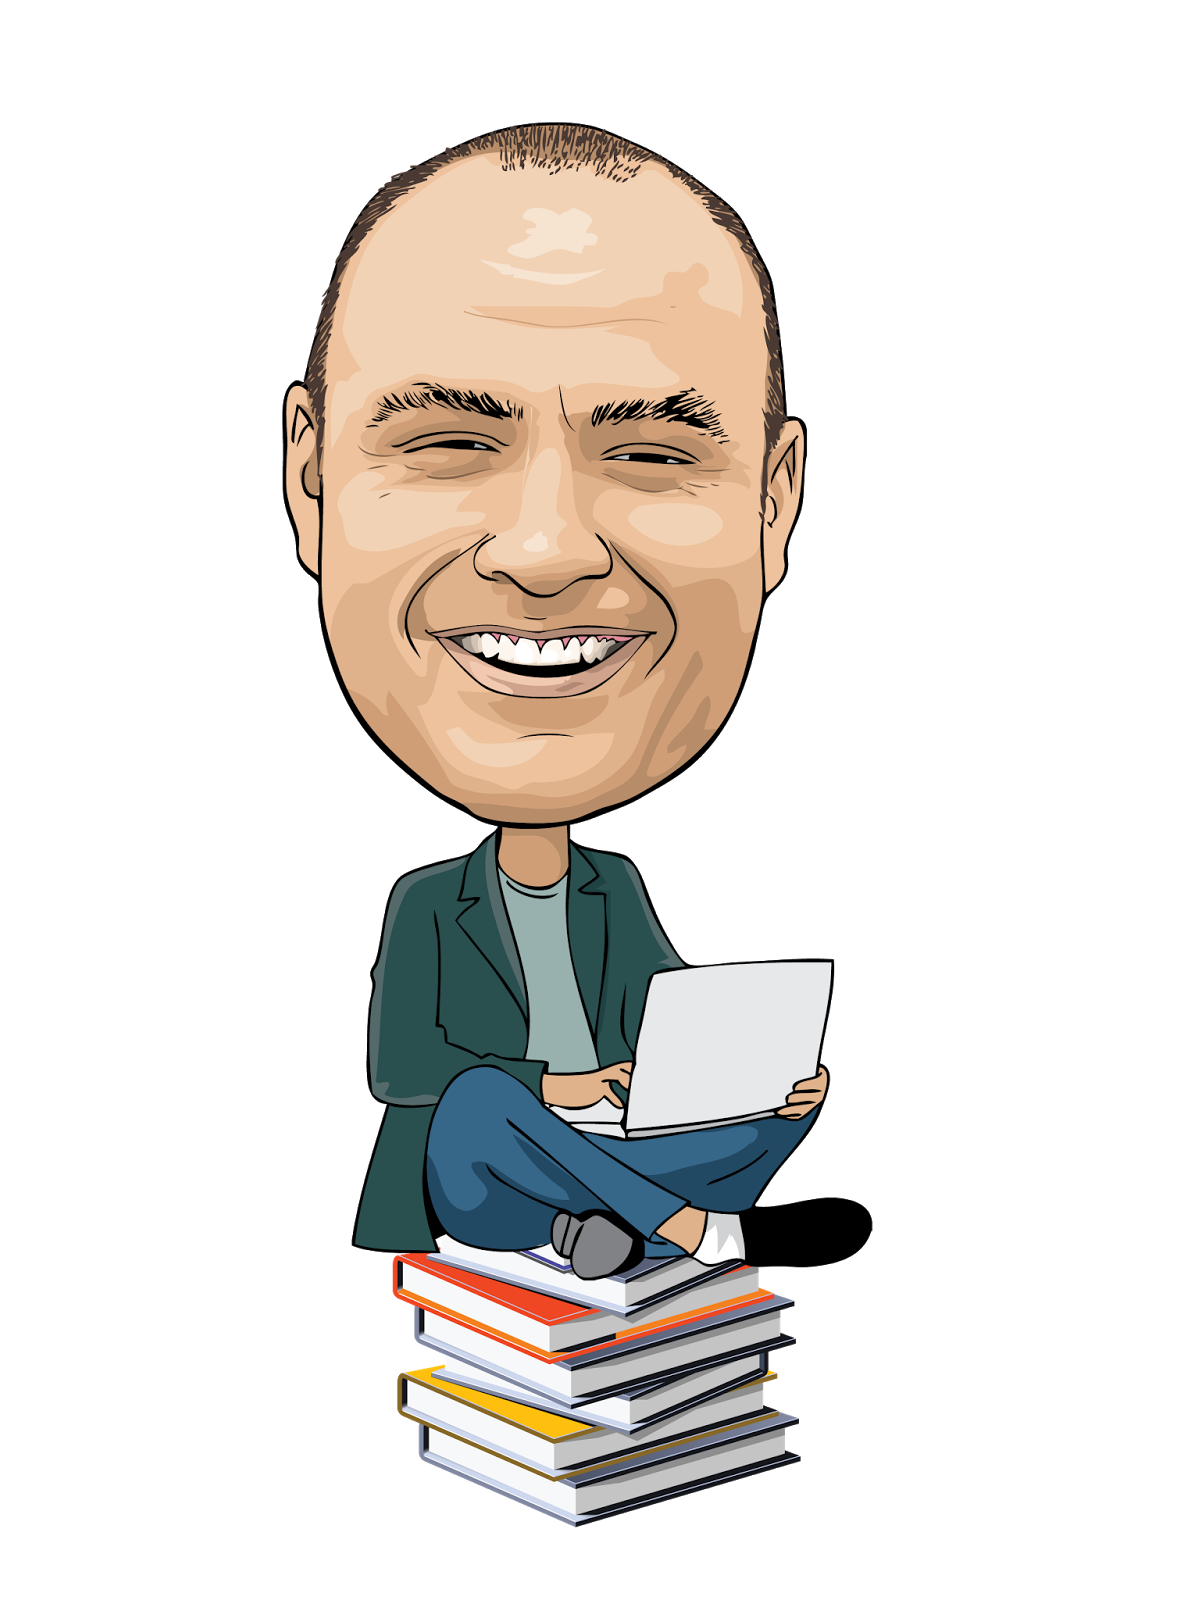 caricaturecartoon: man with book caricature, man with laptop caricature